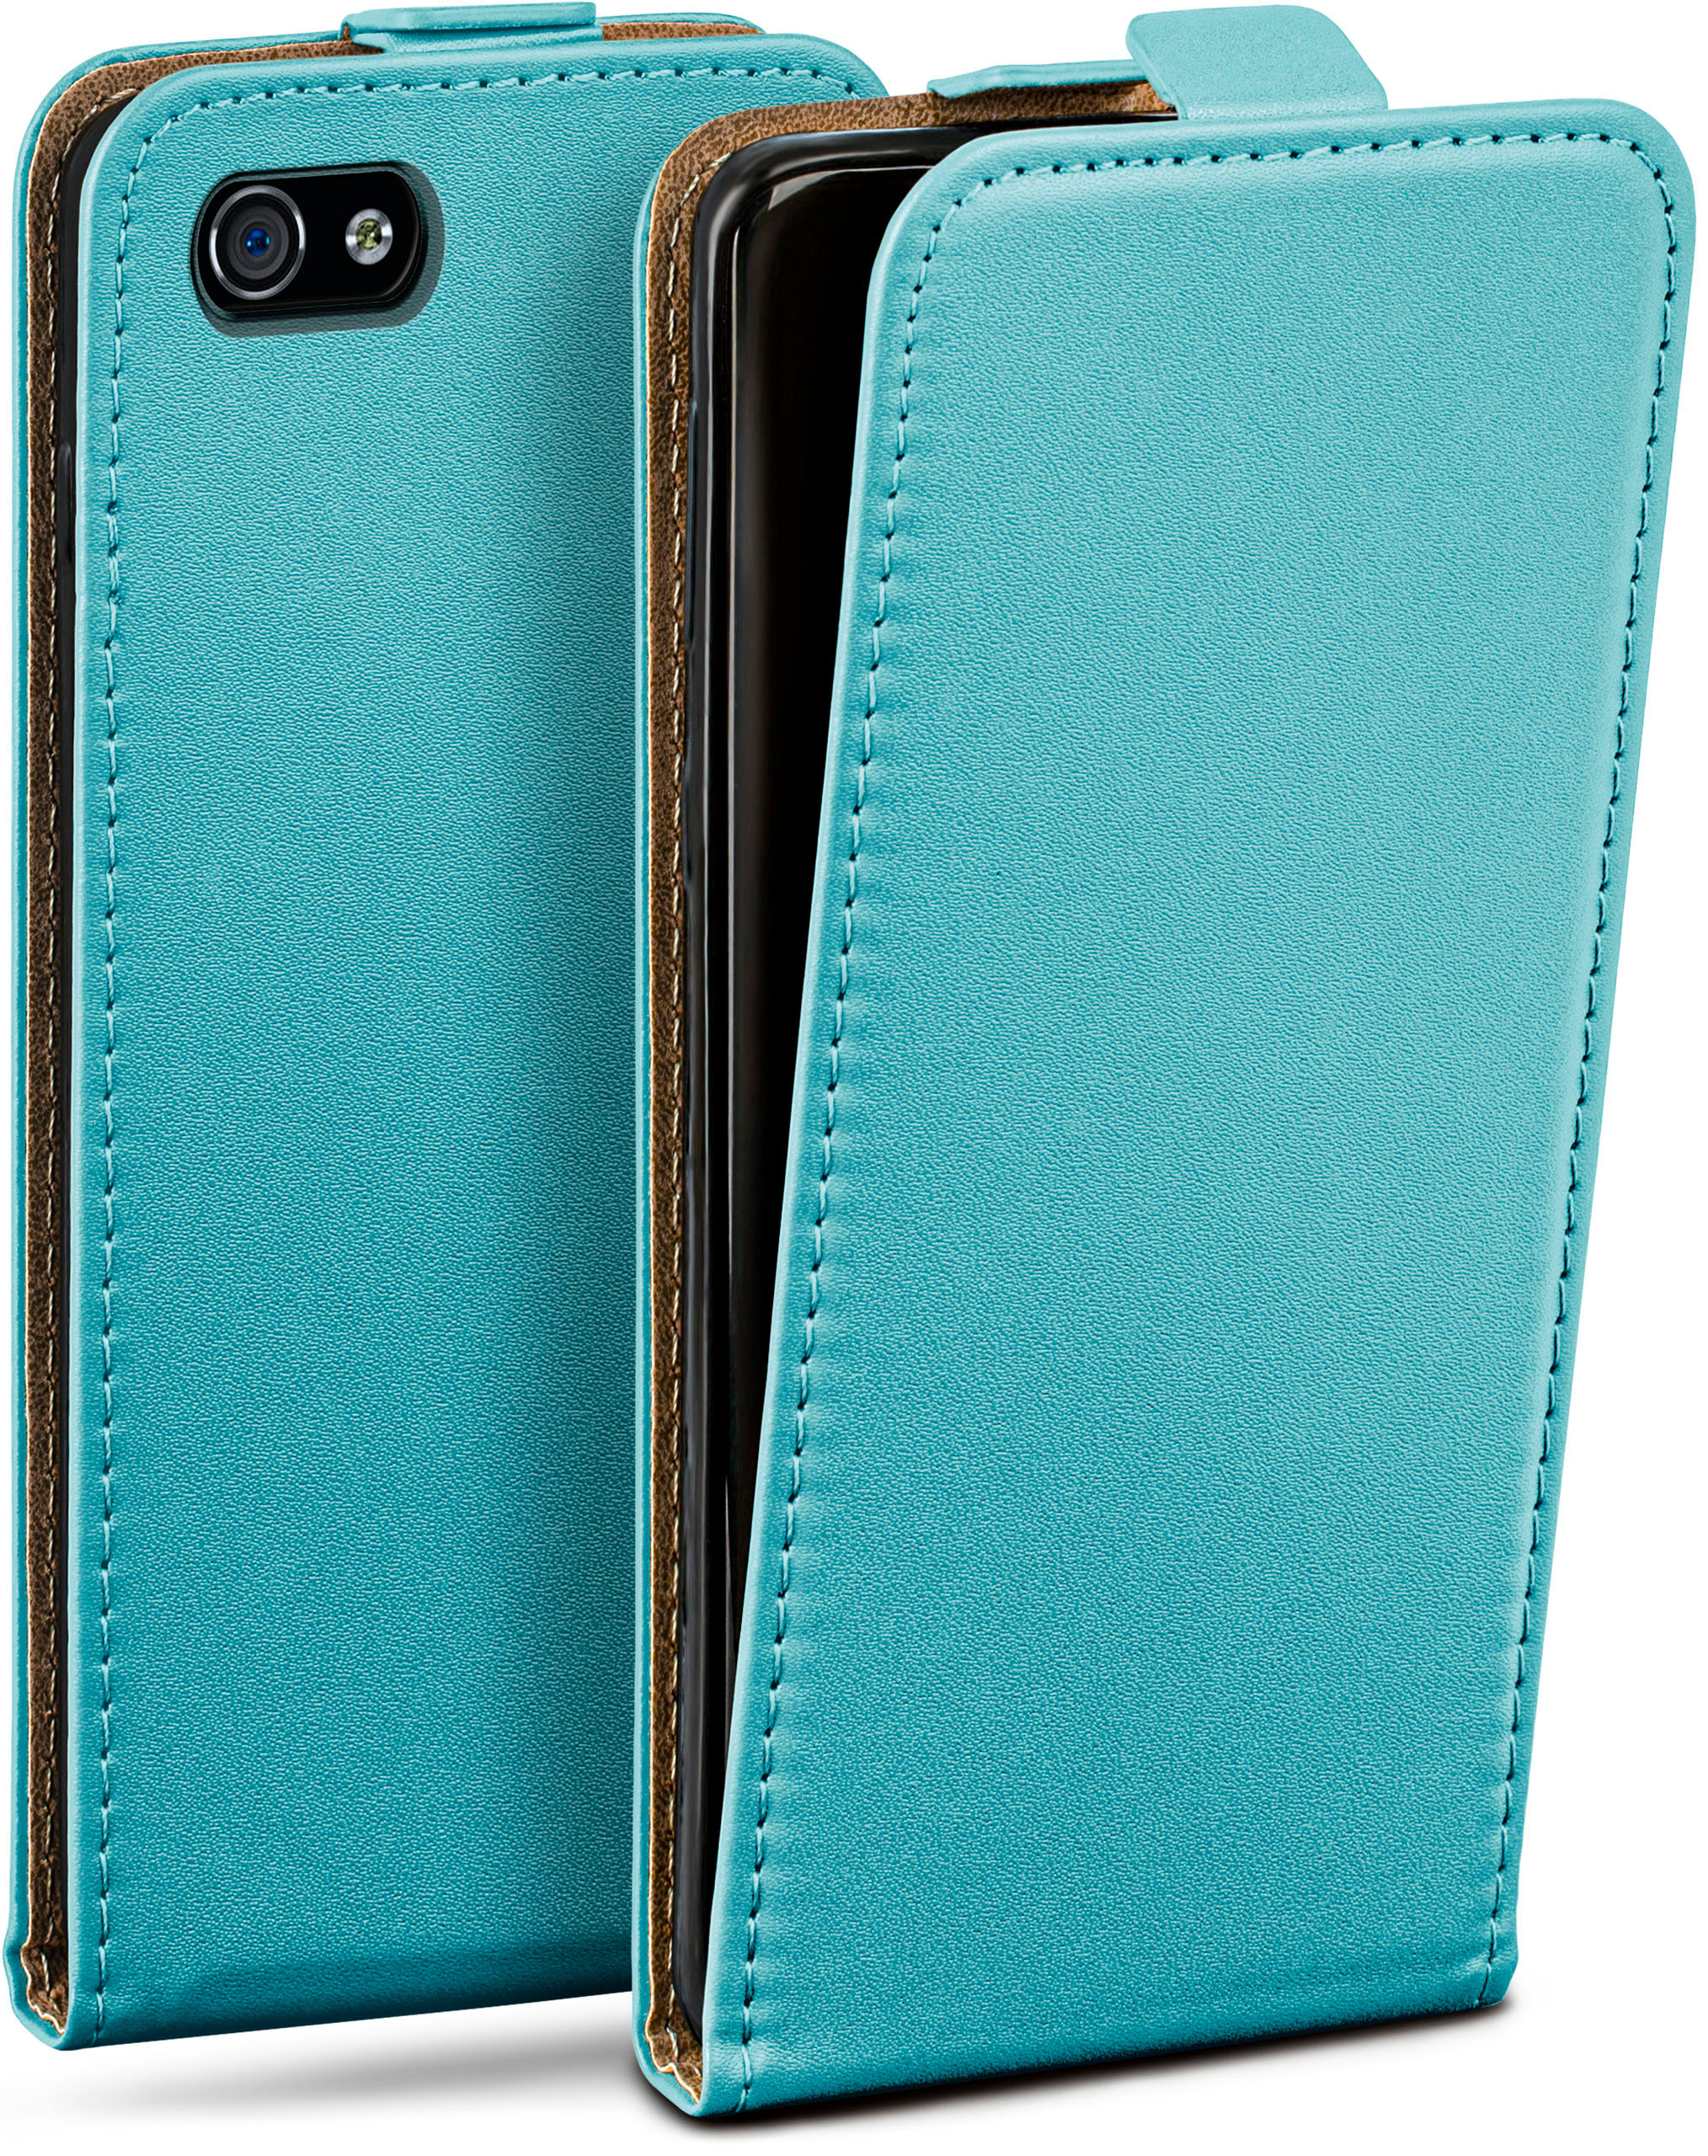 MOEX Flip Case, Aqua-Cyan Flip iPhone 4, iPhone Apple, / 4s Cover